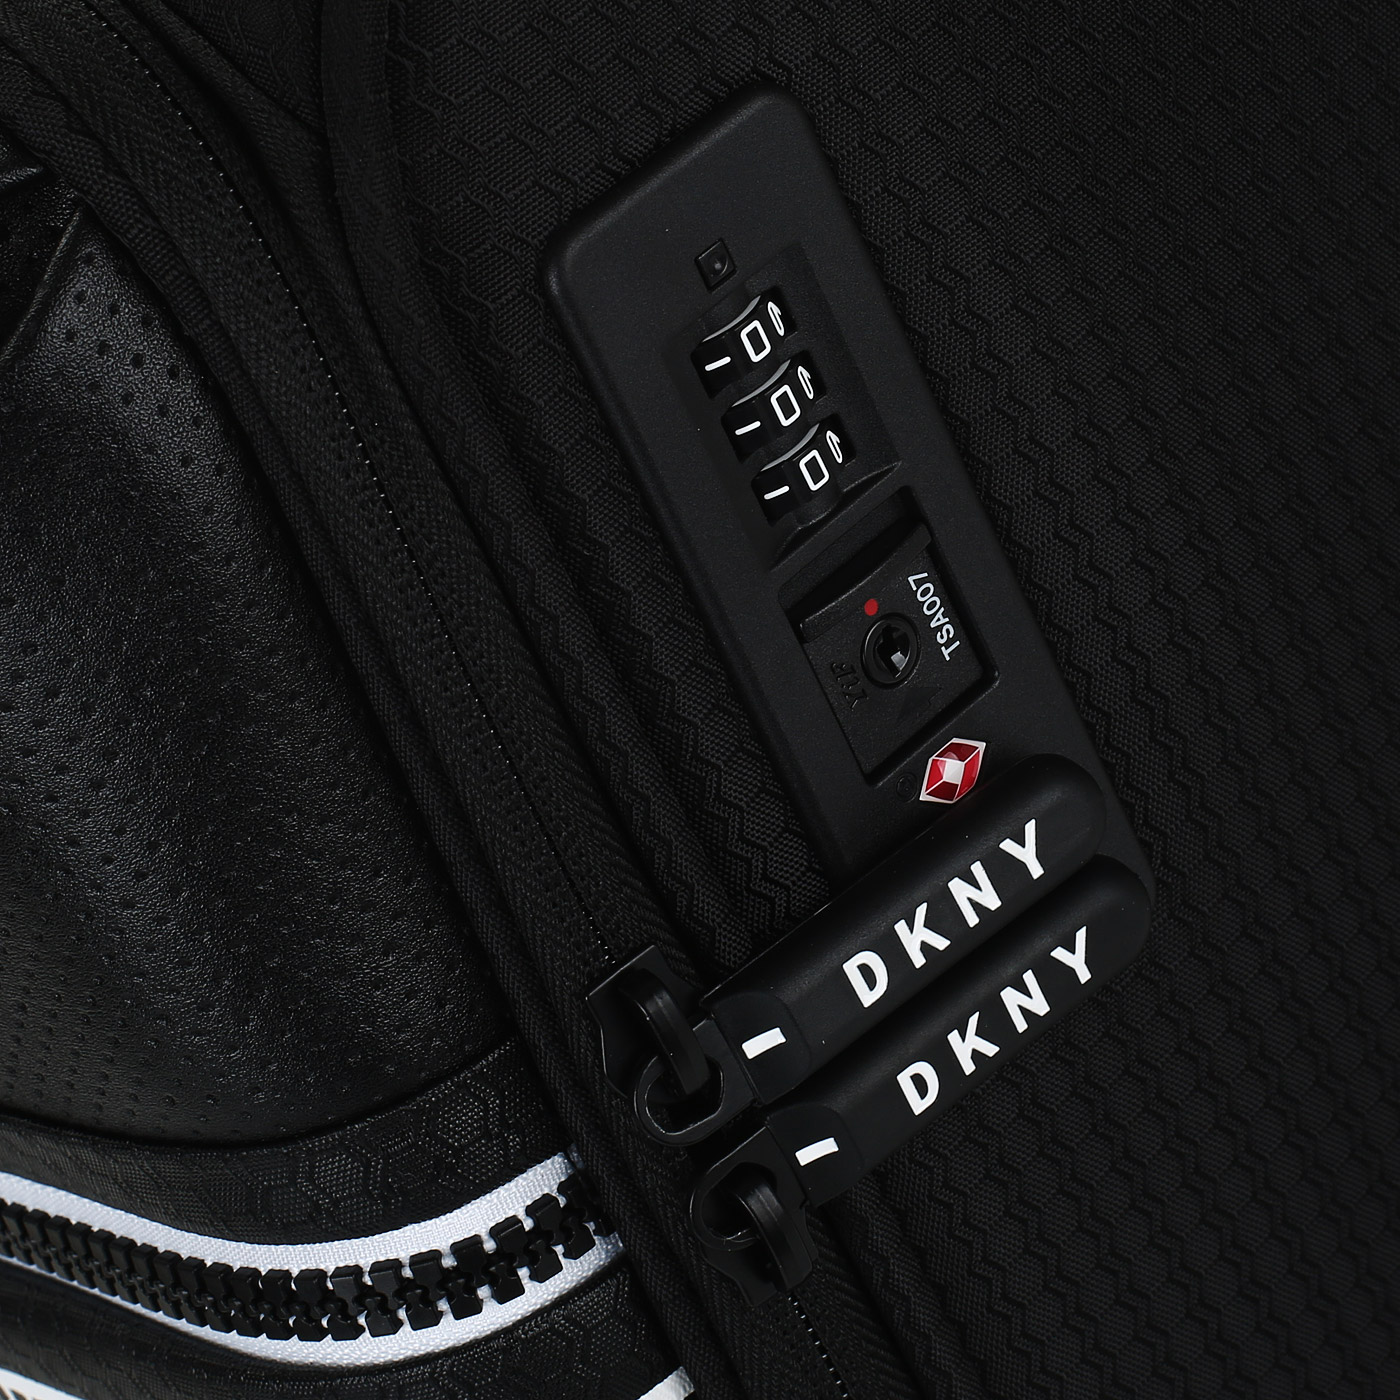 Чемодан маленький S тканевый с кодовым замком DKNY DKNY-306 Fearless